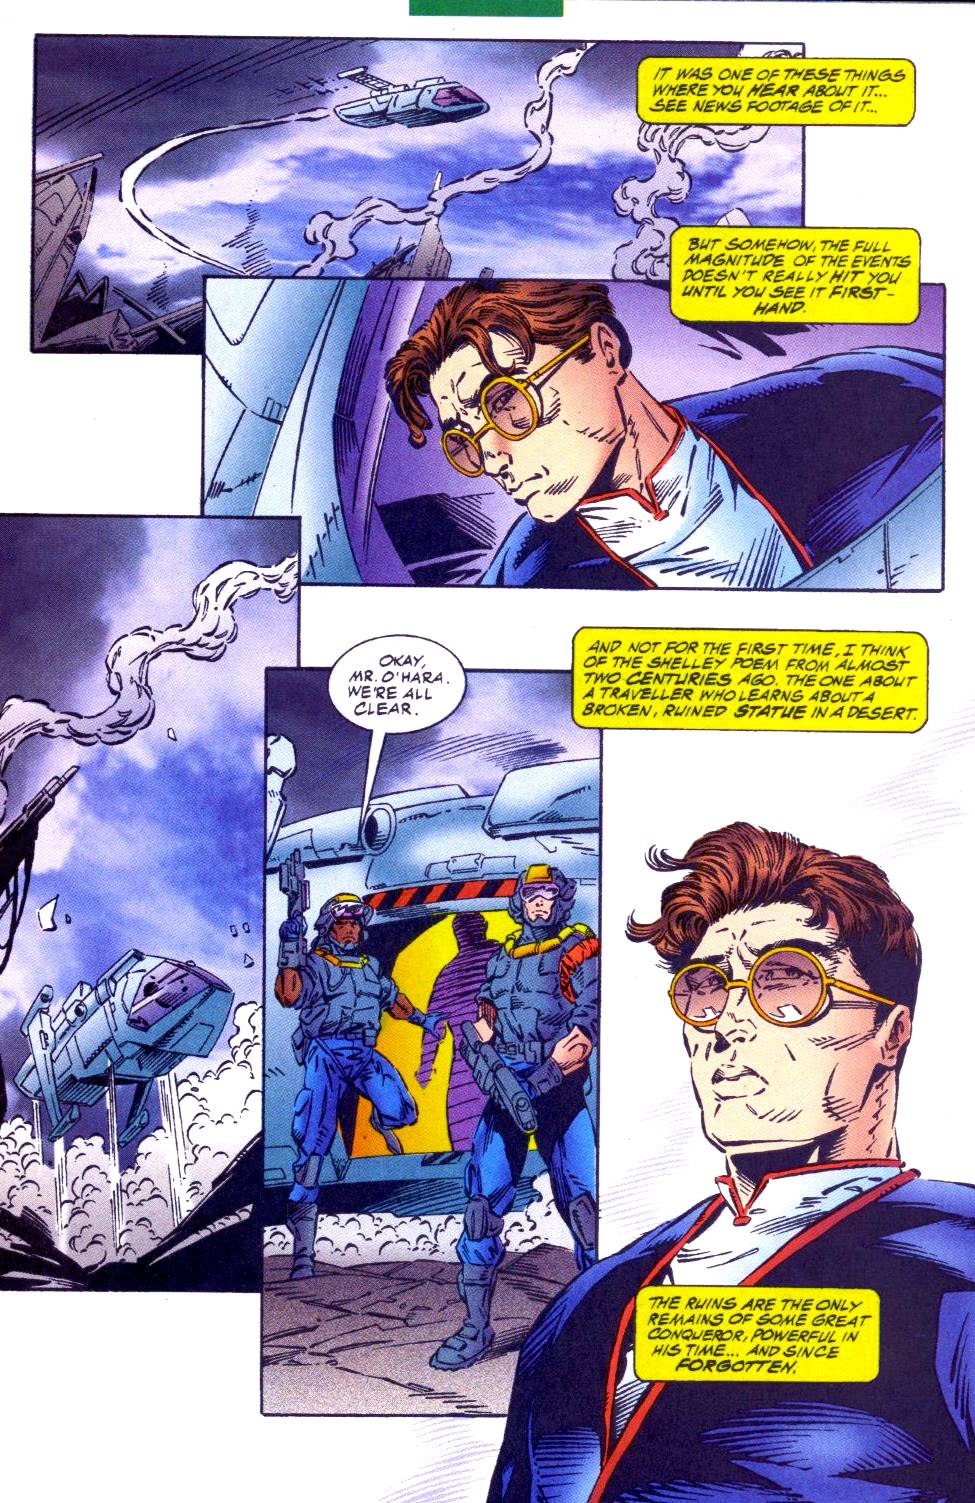 Spider-Man 2099 (1992) issue 41 - Page 2